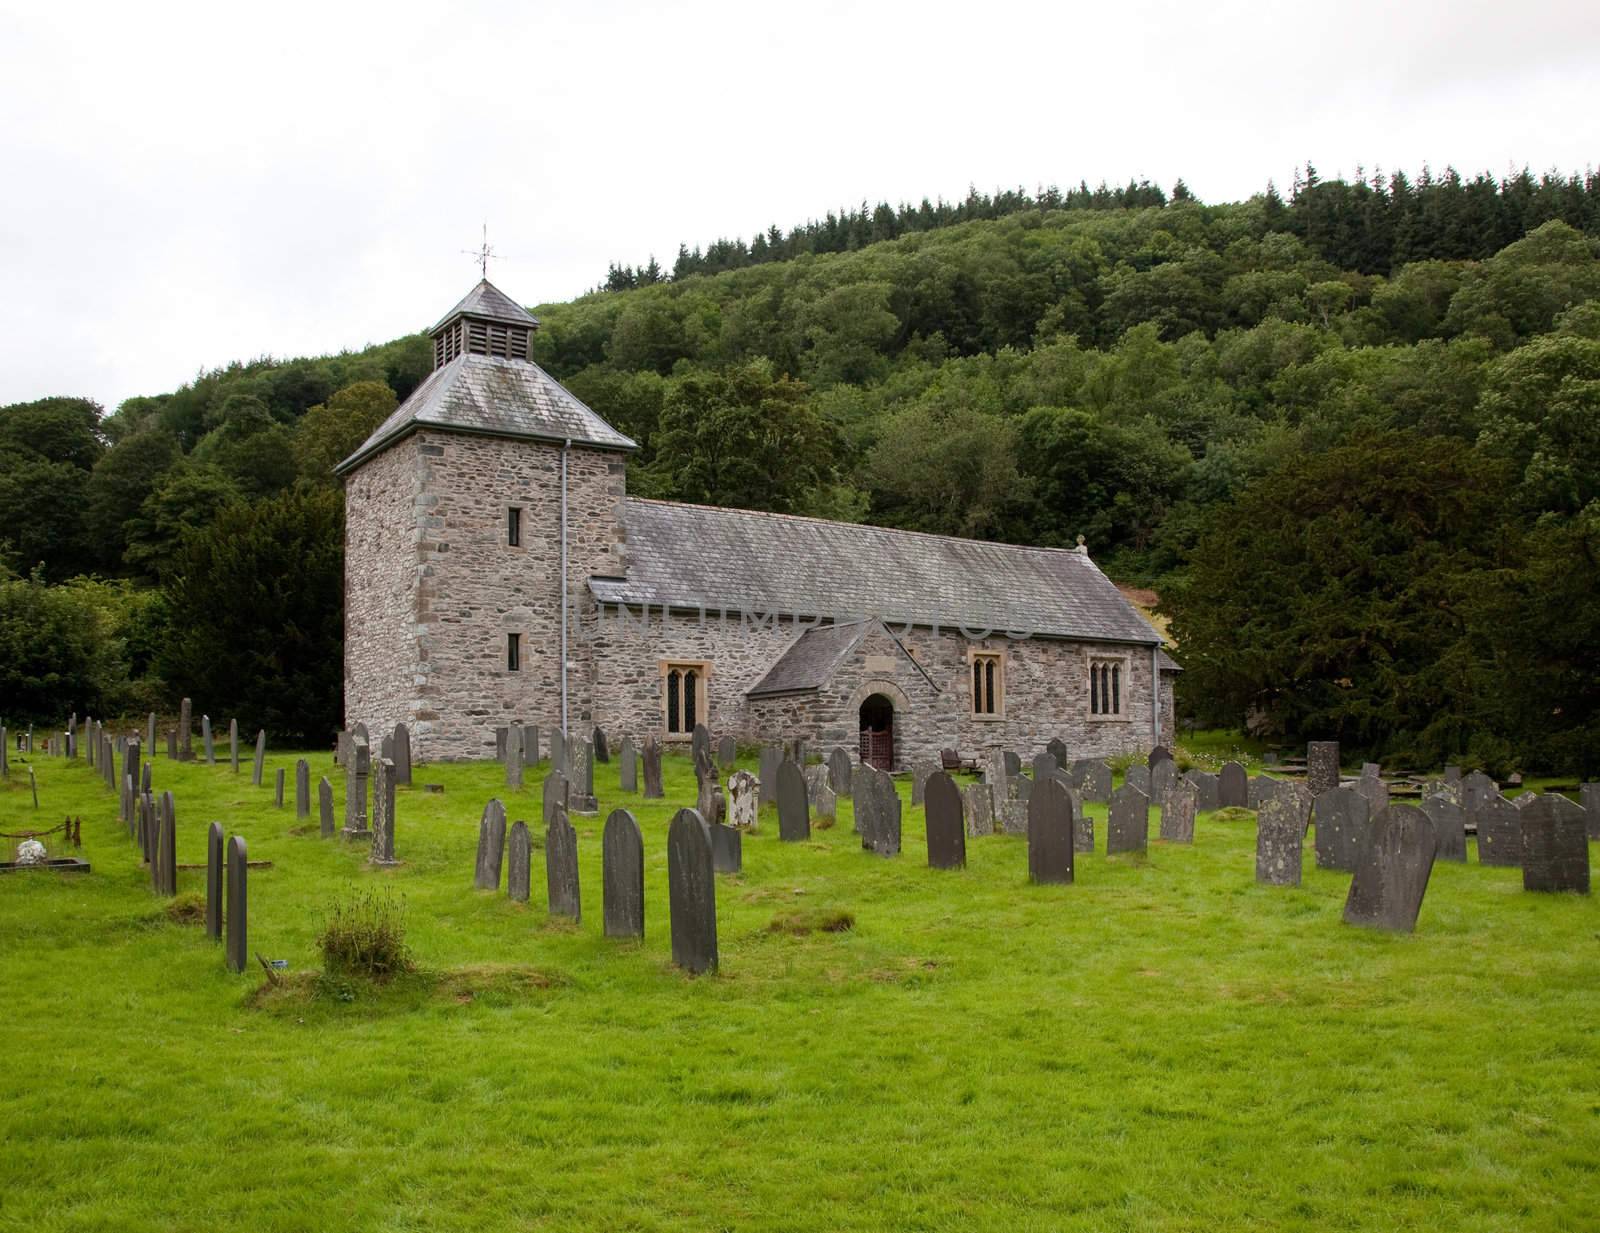 Melangell Church in North Wales by steheap